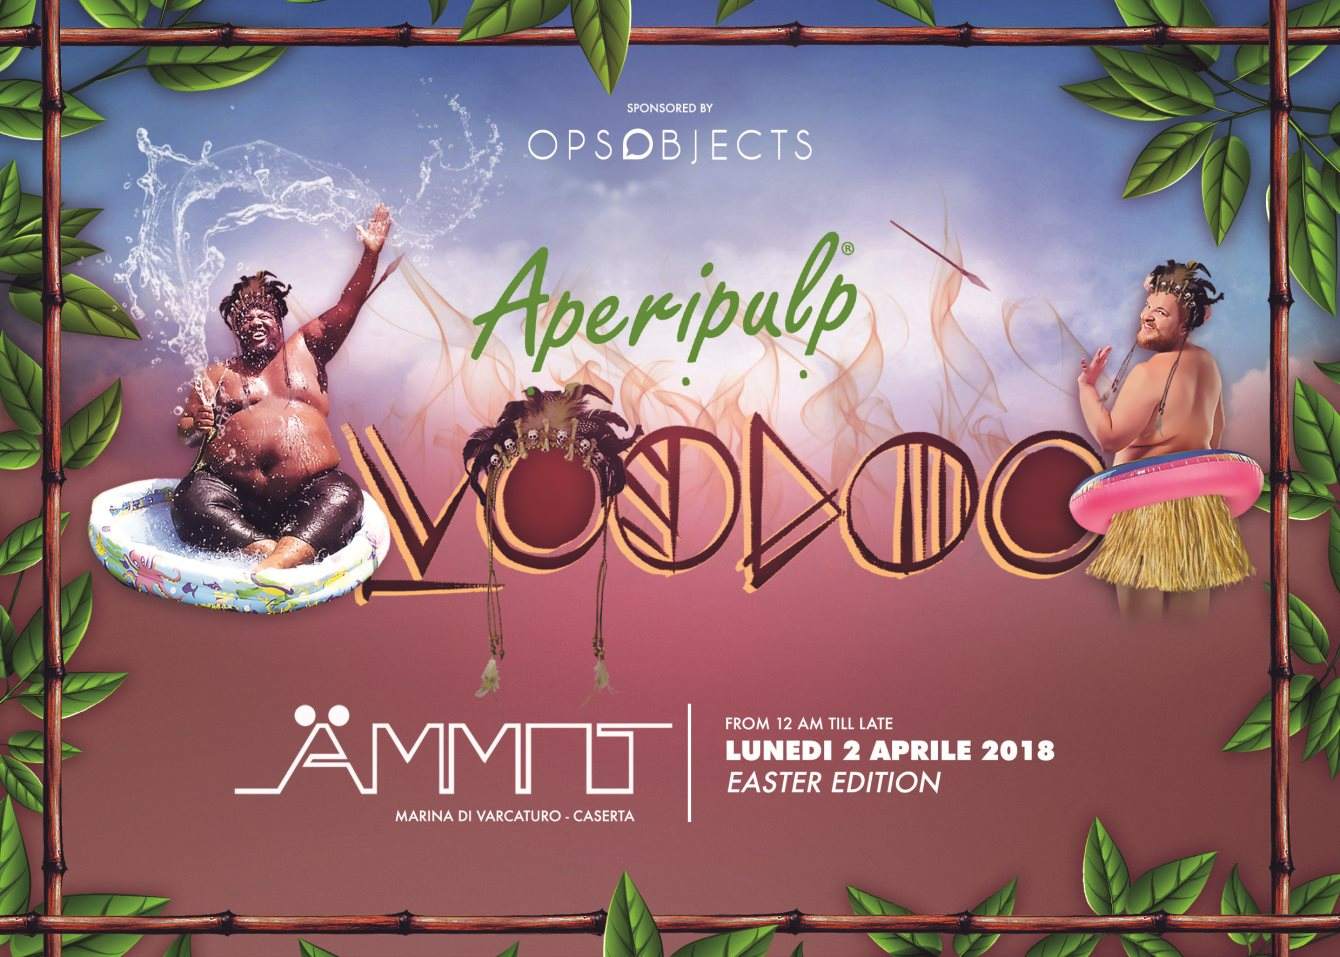 Aperipulp 'Voodoo' - Easter Edition 2018 with Adam Port-Keinemusik - フライヤー表